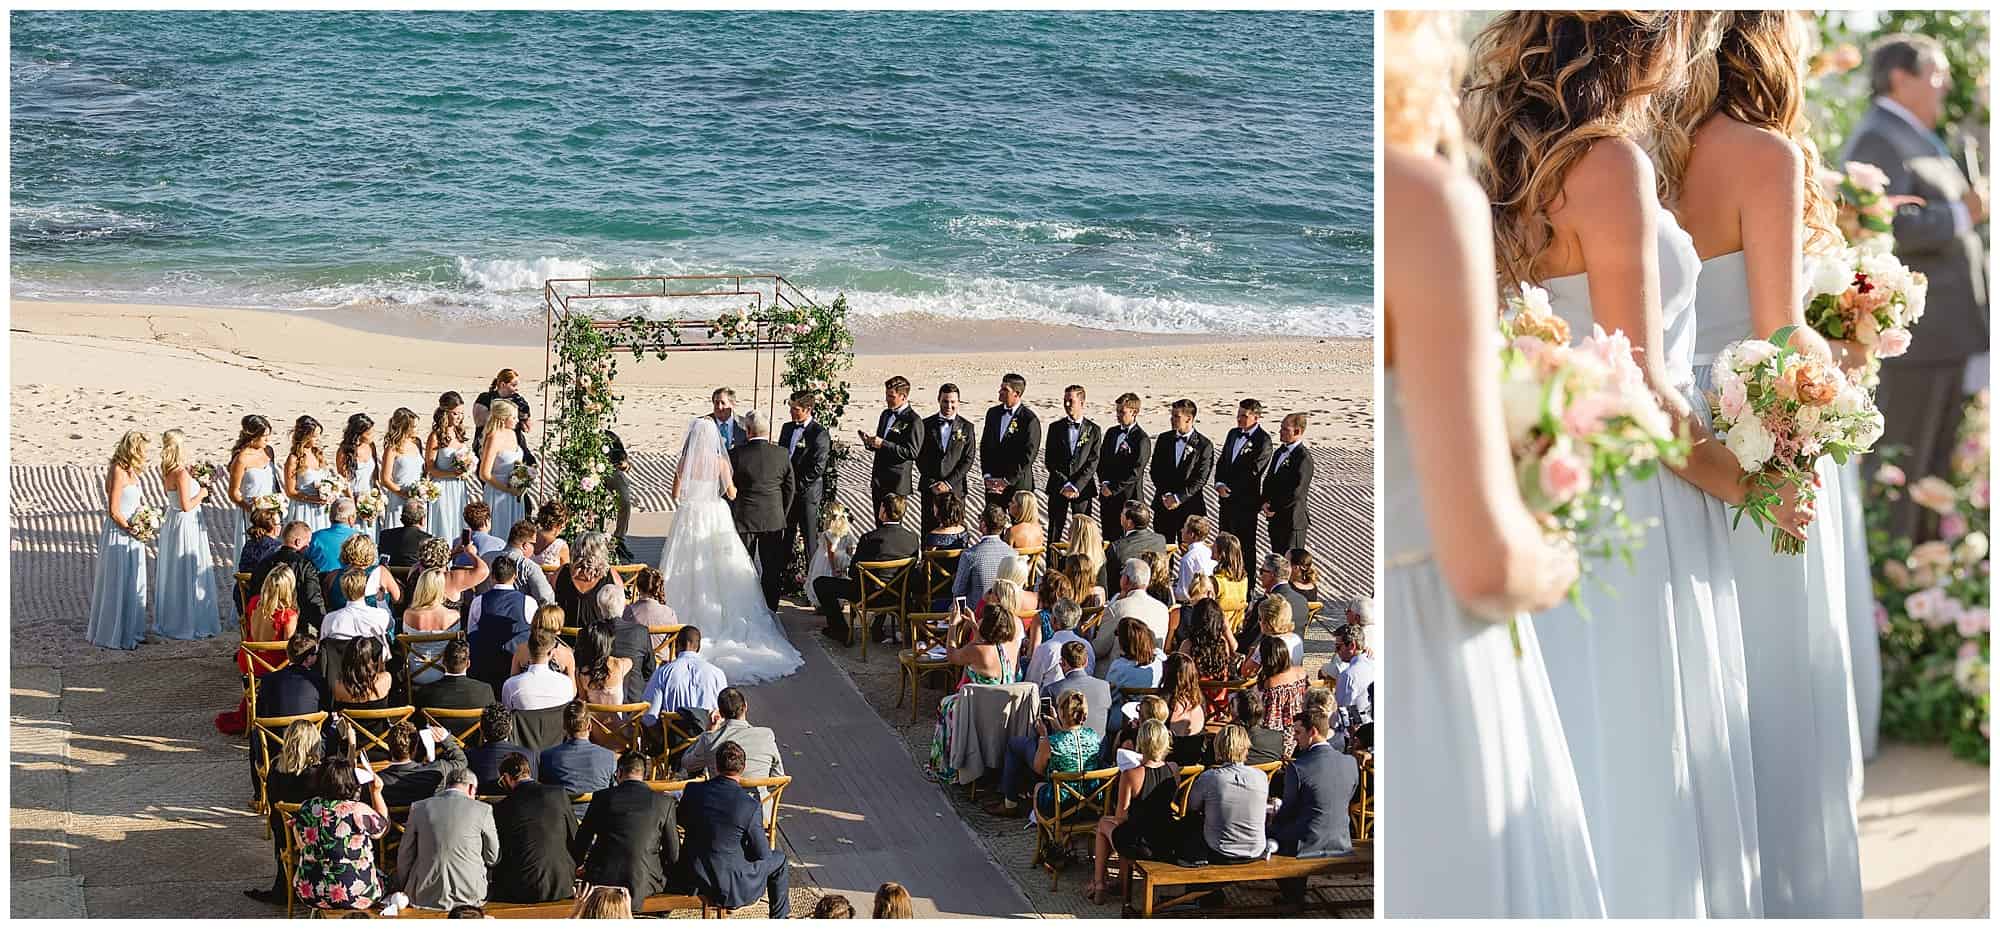 ?pp route=%2Fimage resize&path=%3DcGcq5CN3ADMf9mblxWaoN0Xu92ckJXYoNWaS9VYyF2UfJXZoBXYyd2b09GaQ91ZulGZkV2df9mYhN0L0N3bw1CN2UTNtYTMvIDMvgTMwIjf&width=768 - Janelle & Rob's stunning beach wedding at Chileno Bay